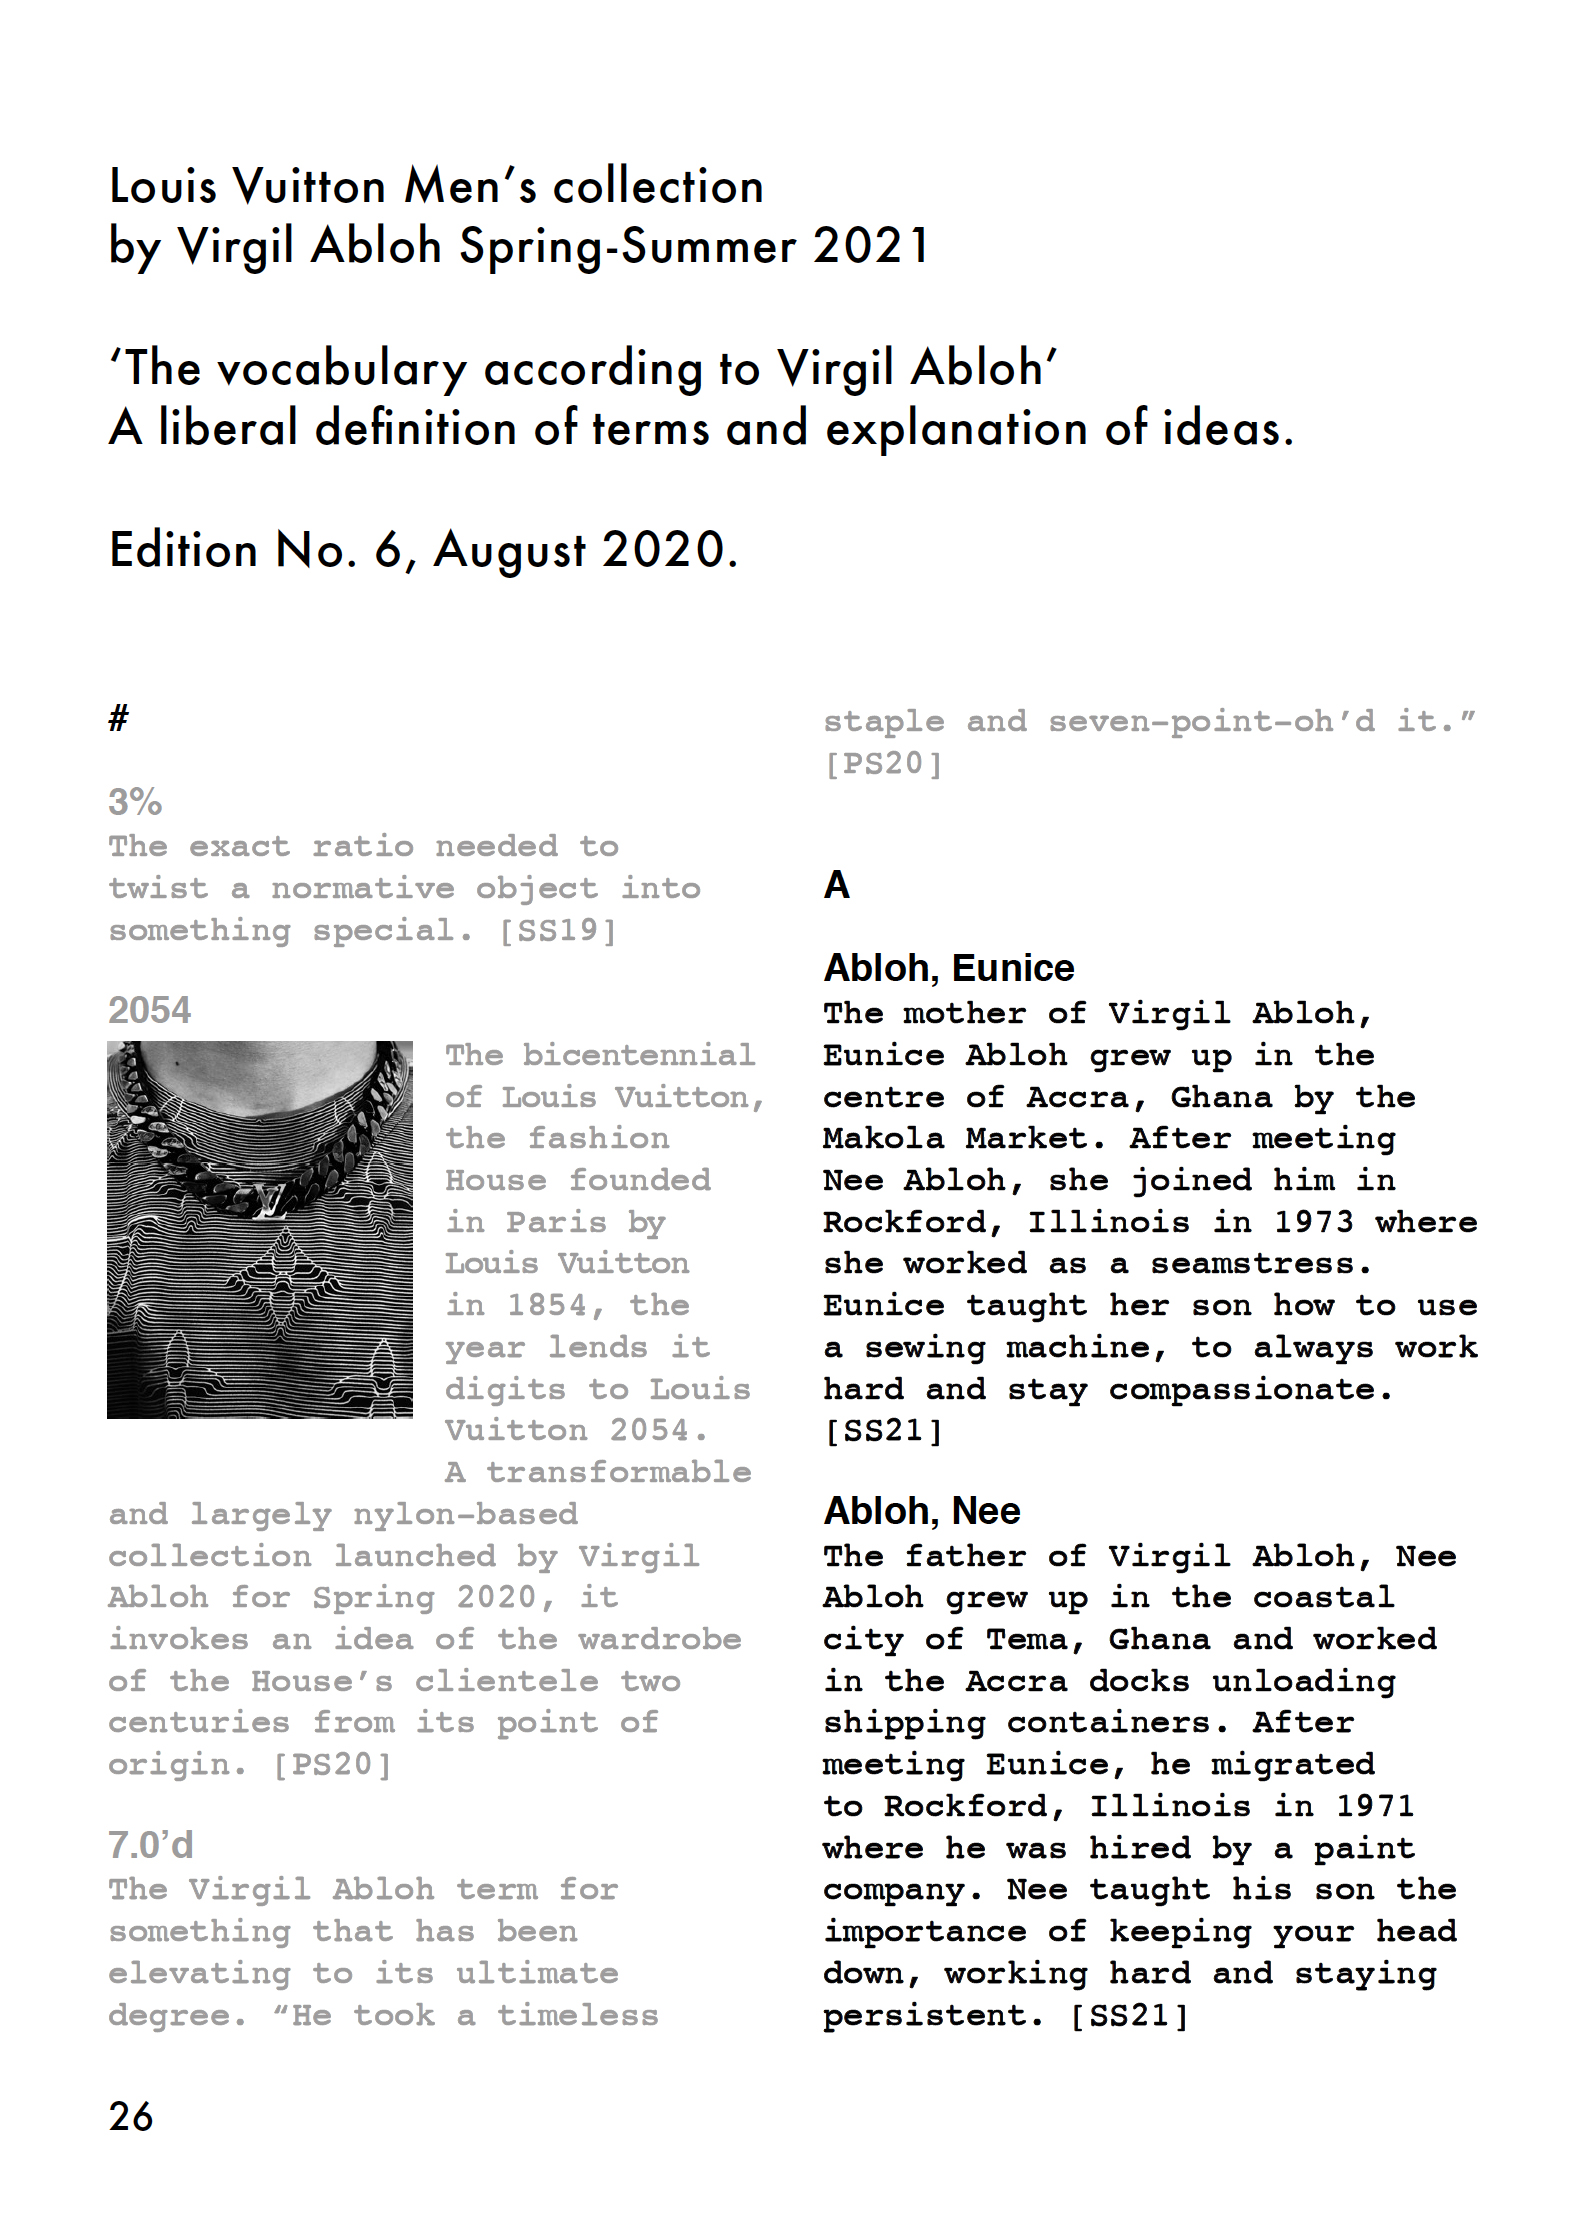 Virgil's Louis Vuitton 2054 Collection Explores the Future of